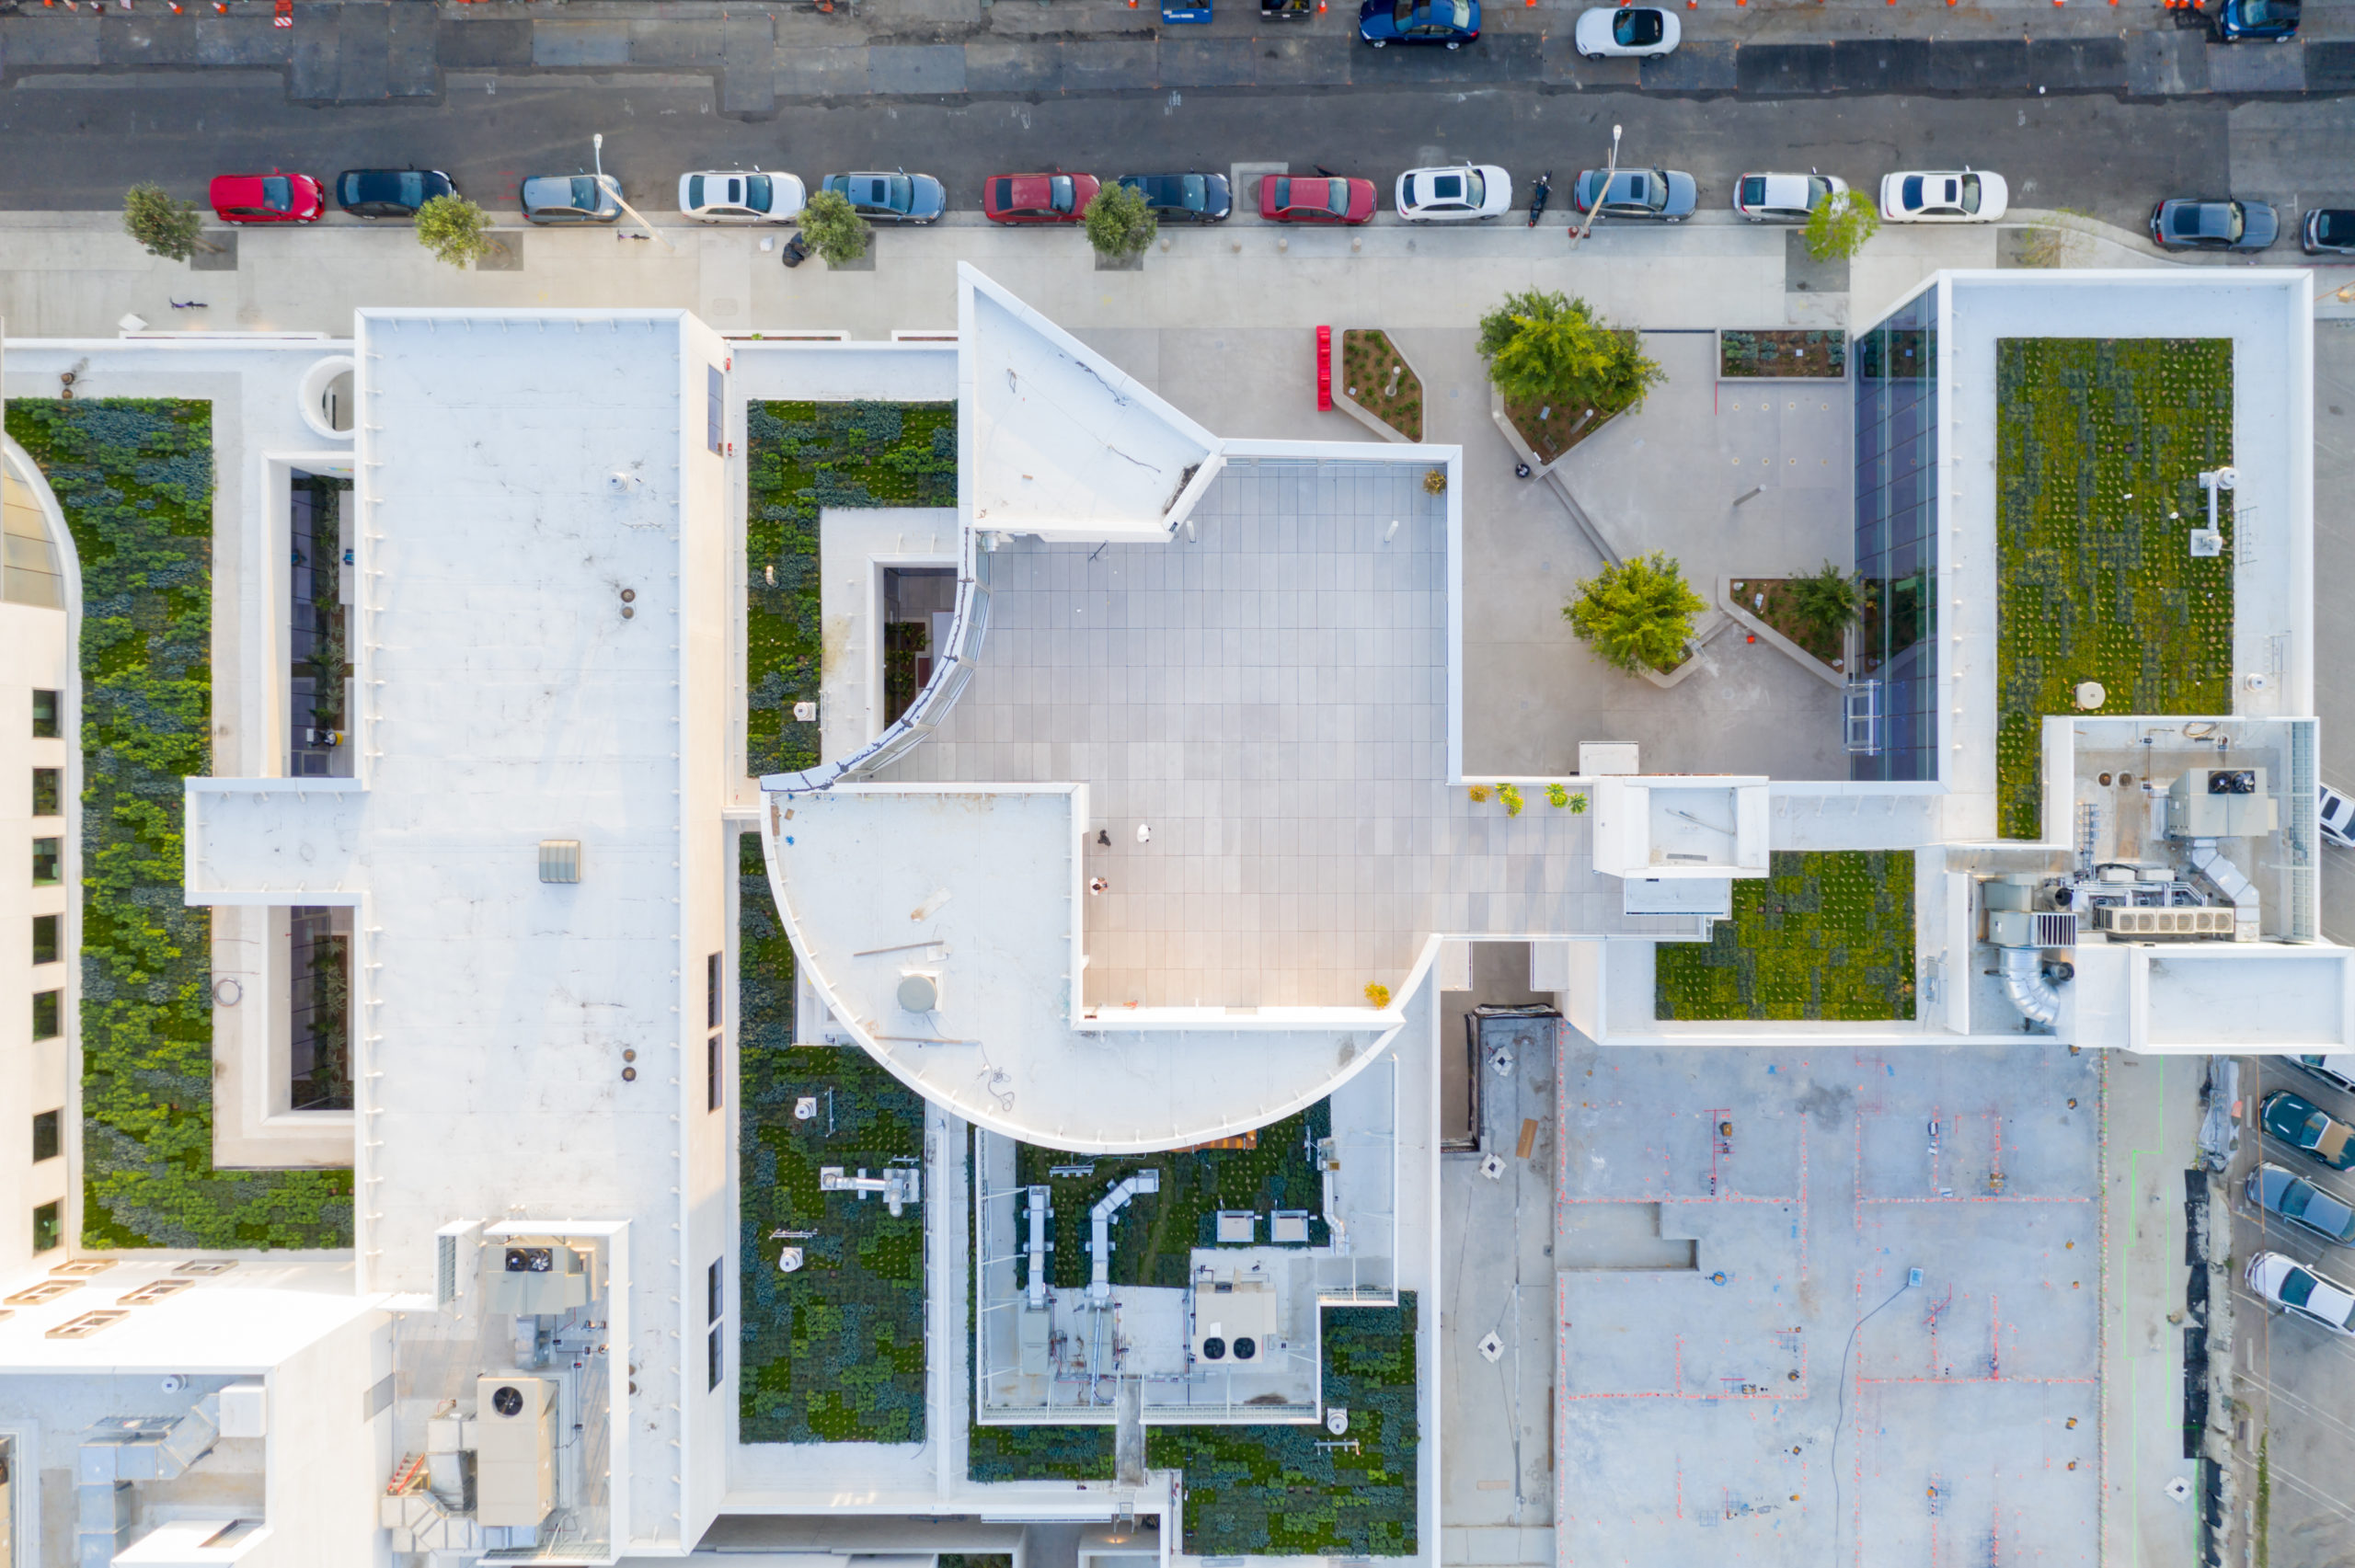 Architecture Honor Award: Los Angeles LGBT Center Anita May Rosenstein Campus by Leong Leong, Killefer Flammang Architects, and Pamela Burton & Company. Photo: Iwan Baan.